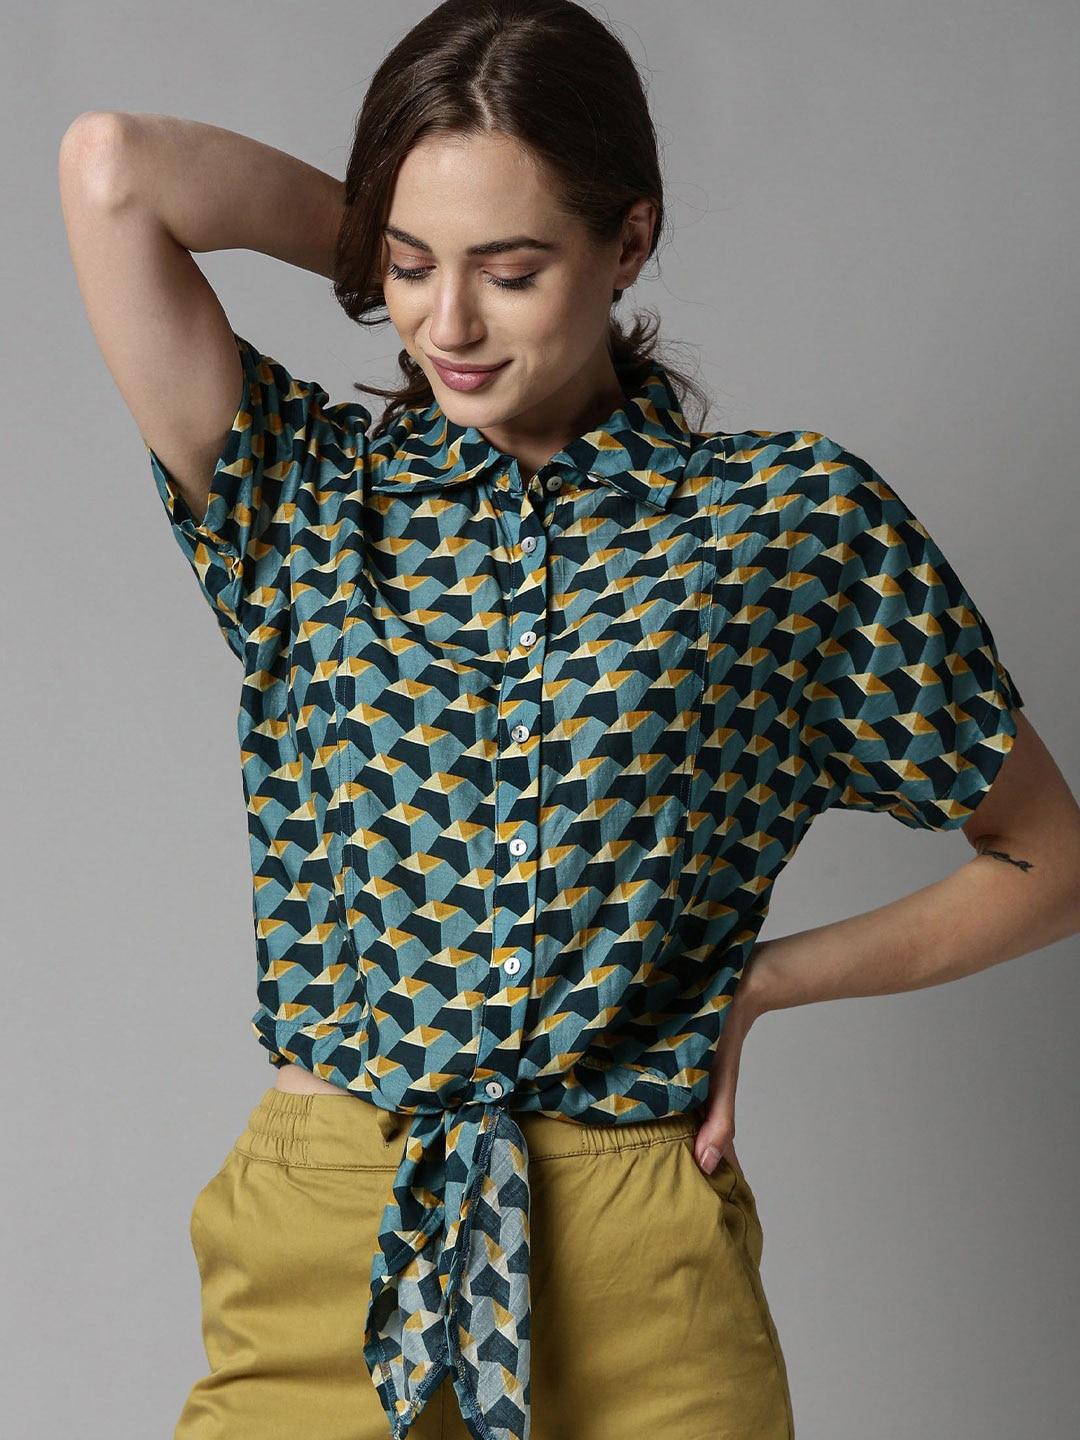 RAREISM Blue Geometric Printed Shirt Style Top With Tie-Up